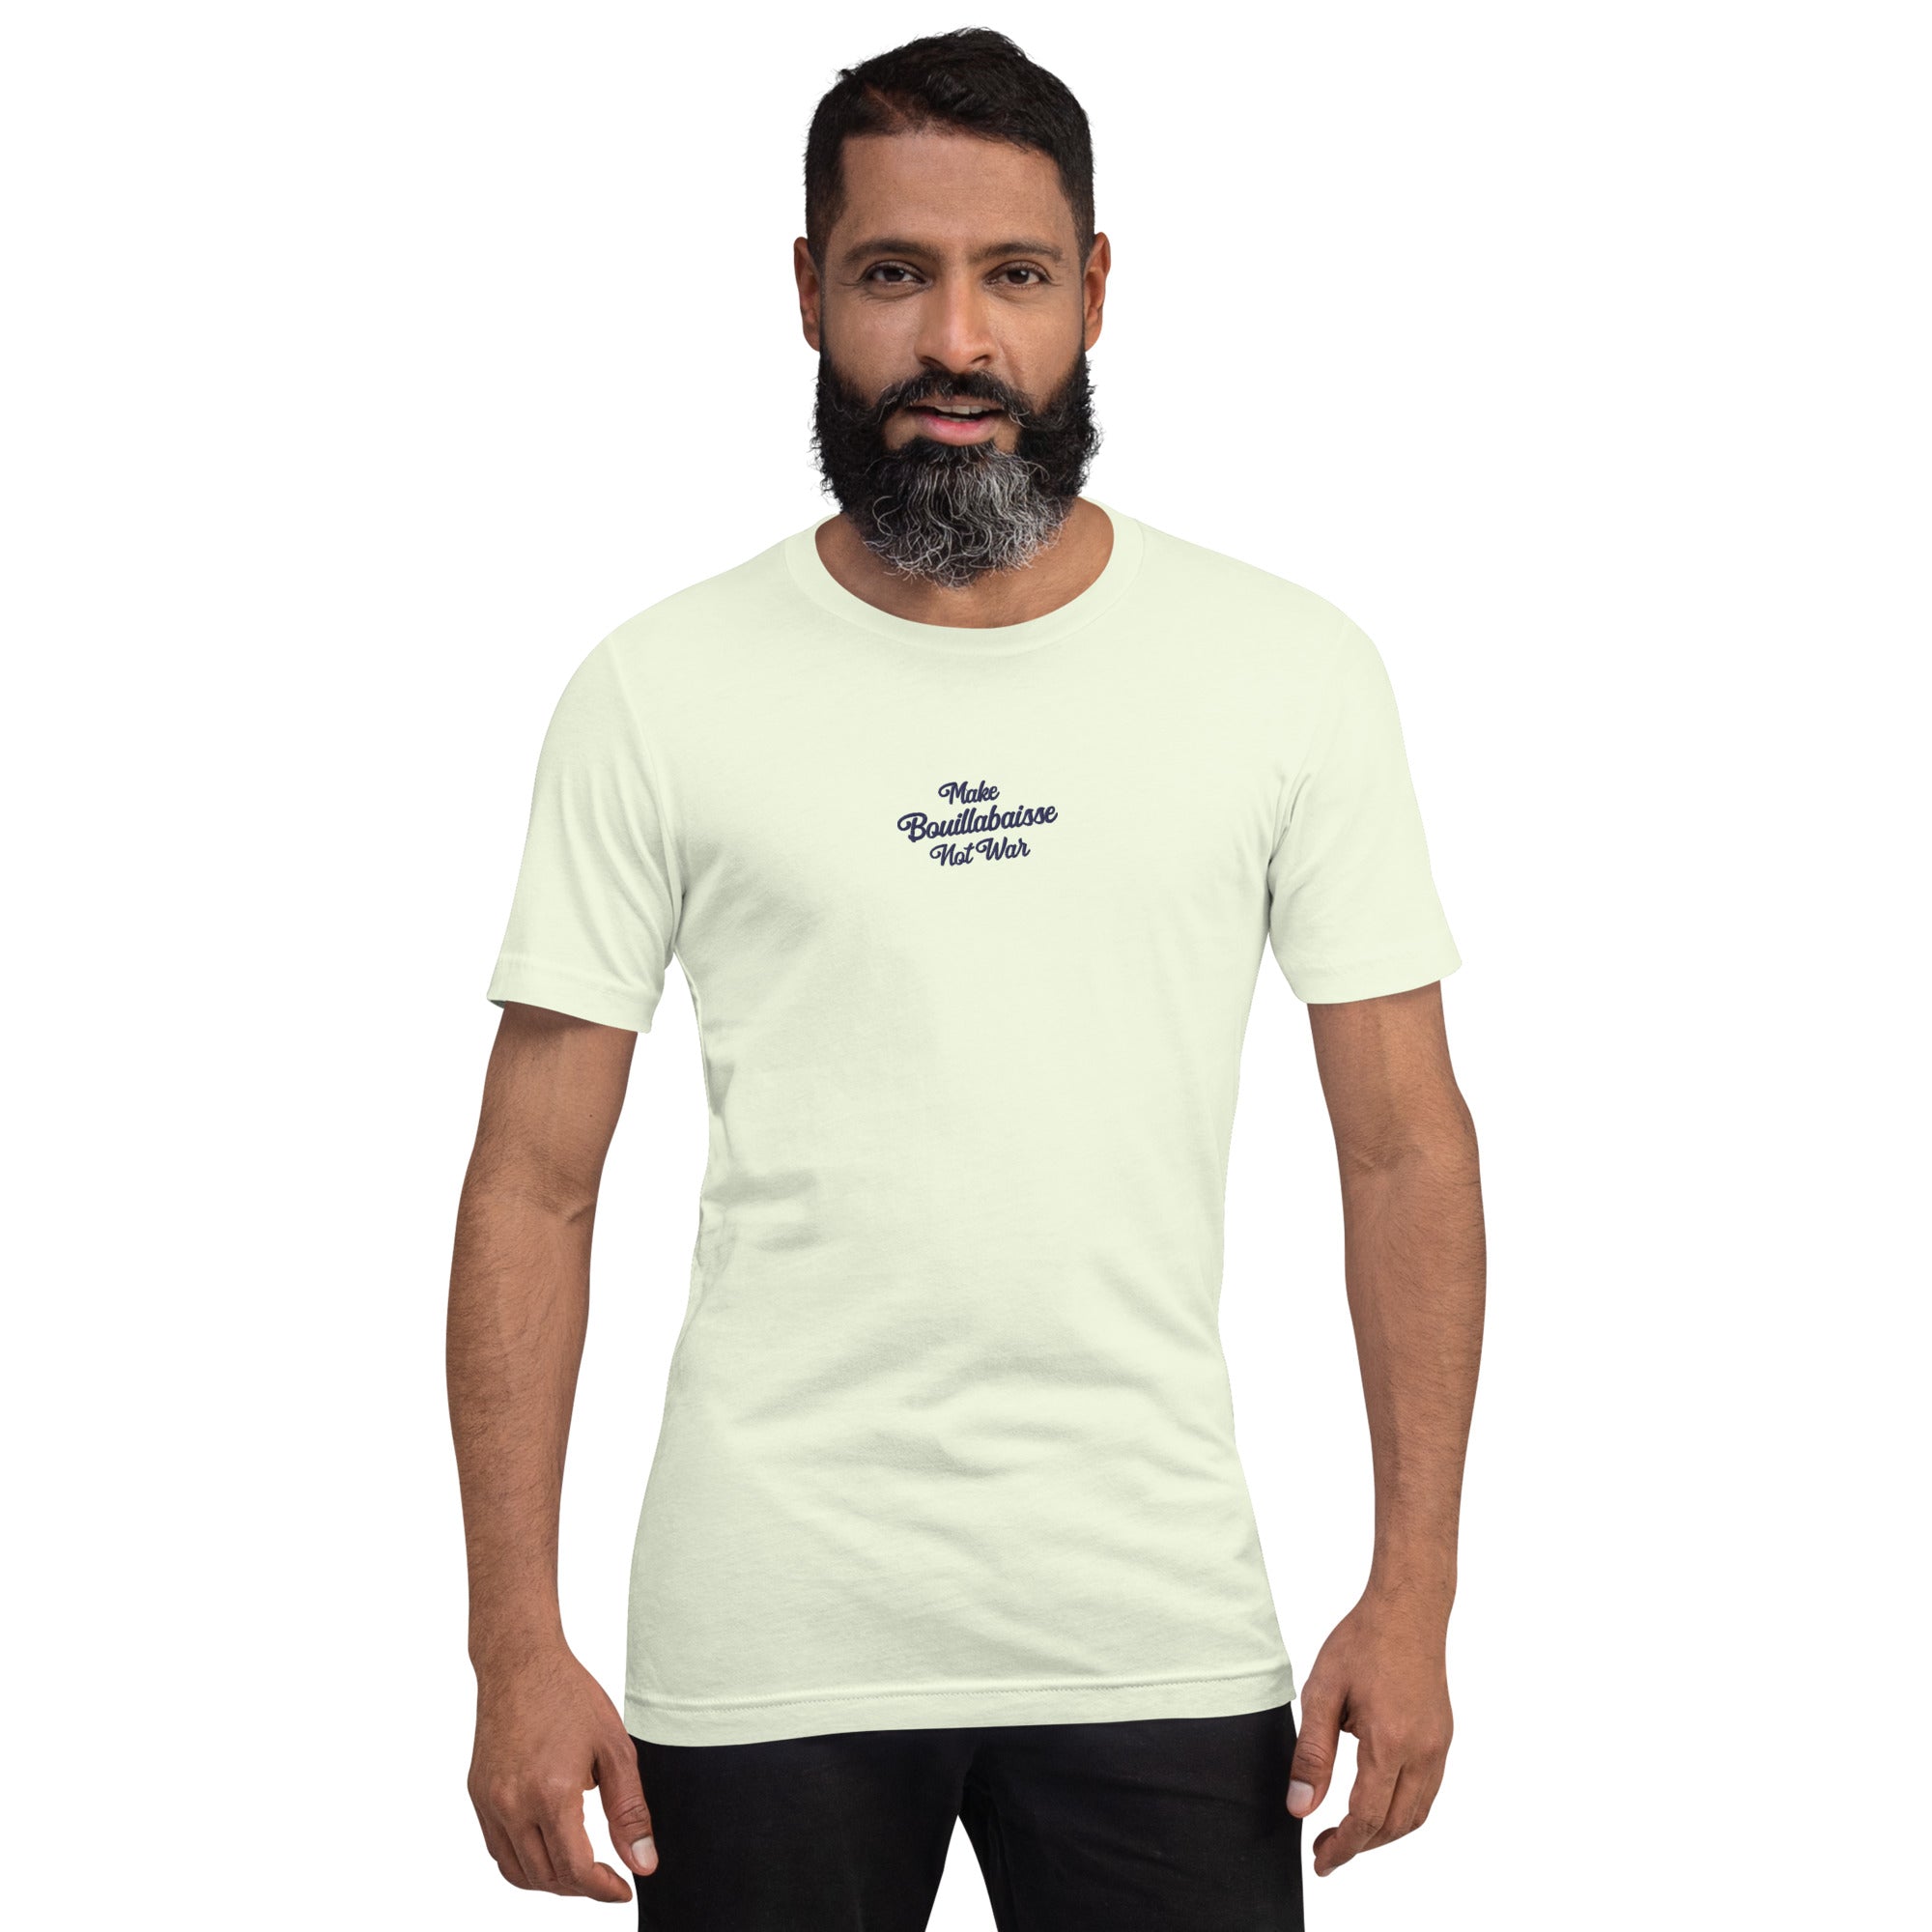 Unisex cotton t-shirt Make Bouillabaisse Not War Navy embroidered pattern on light colors